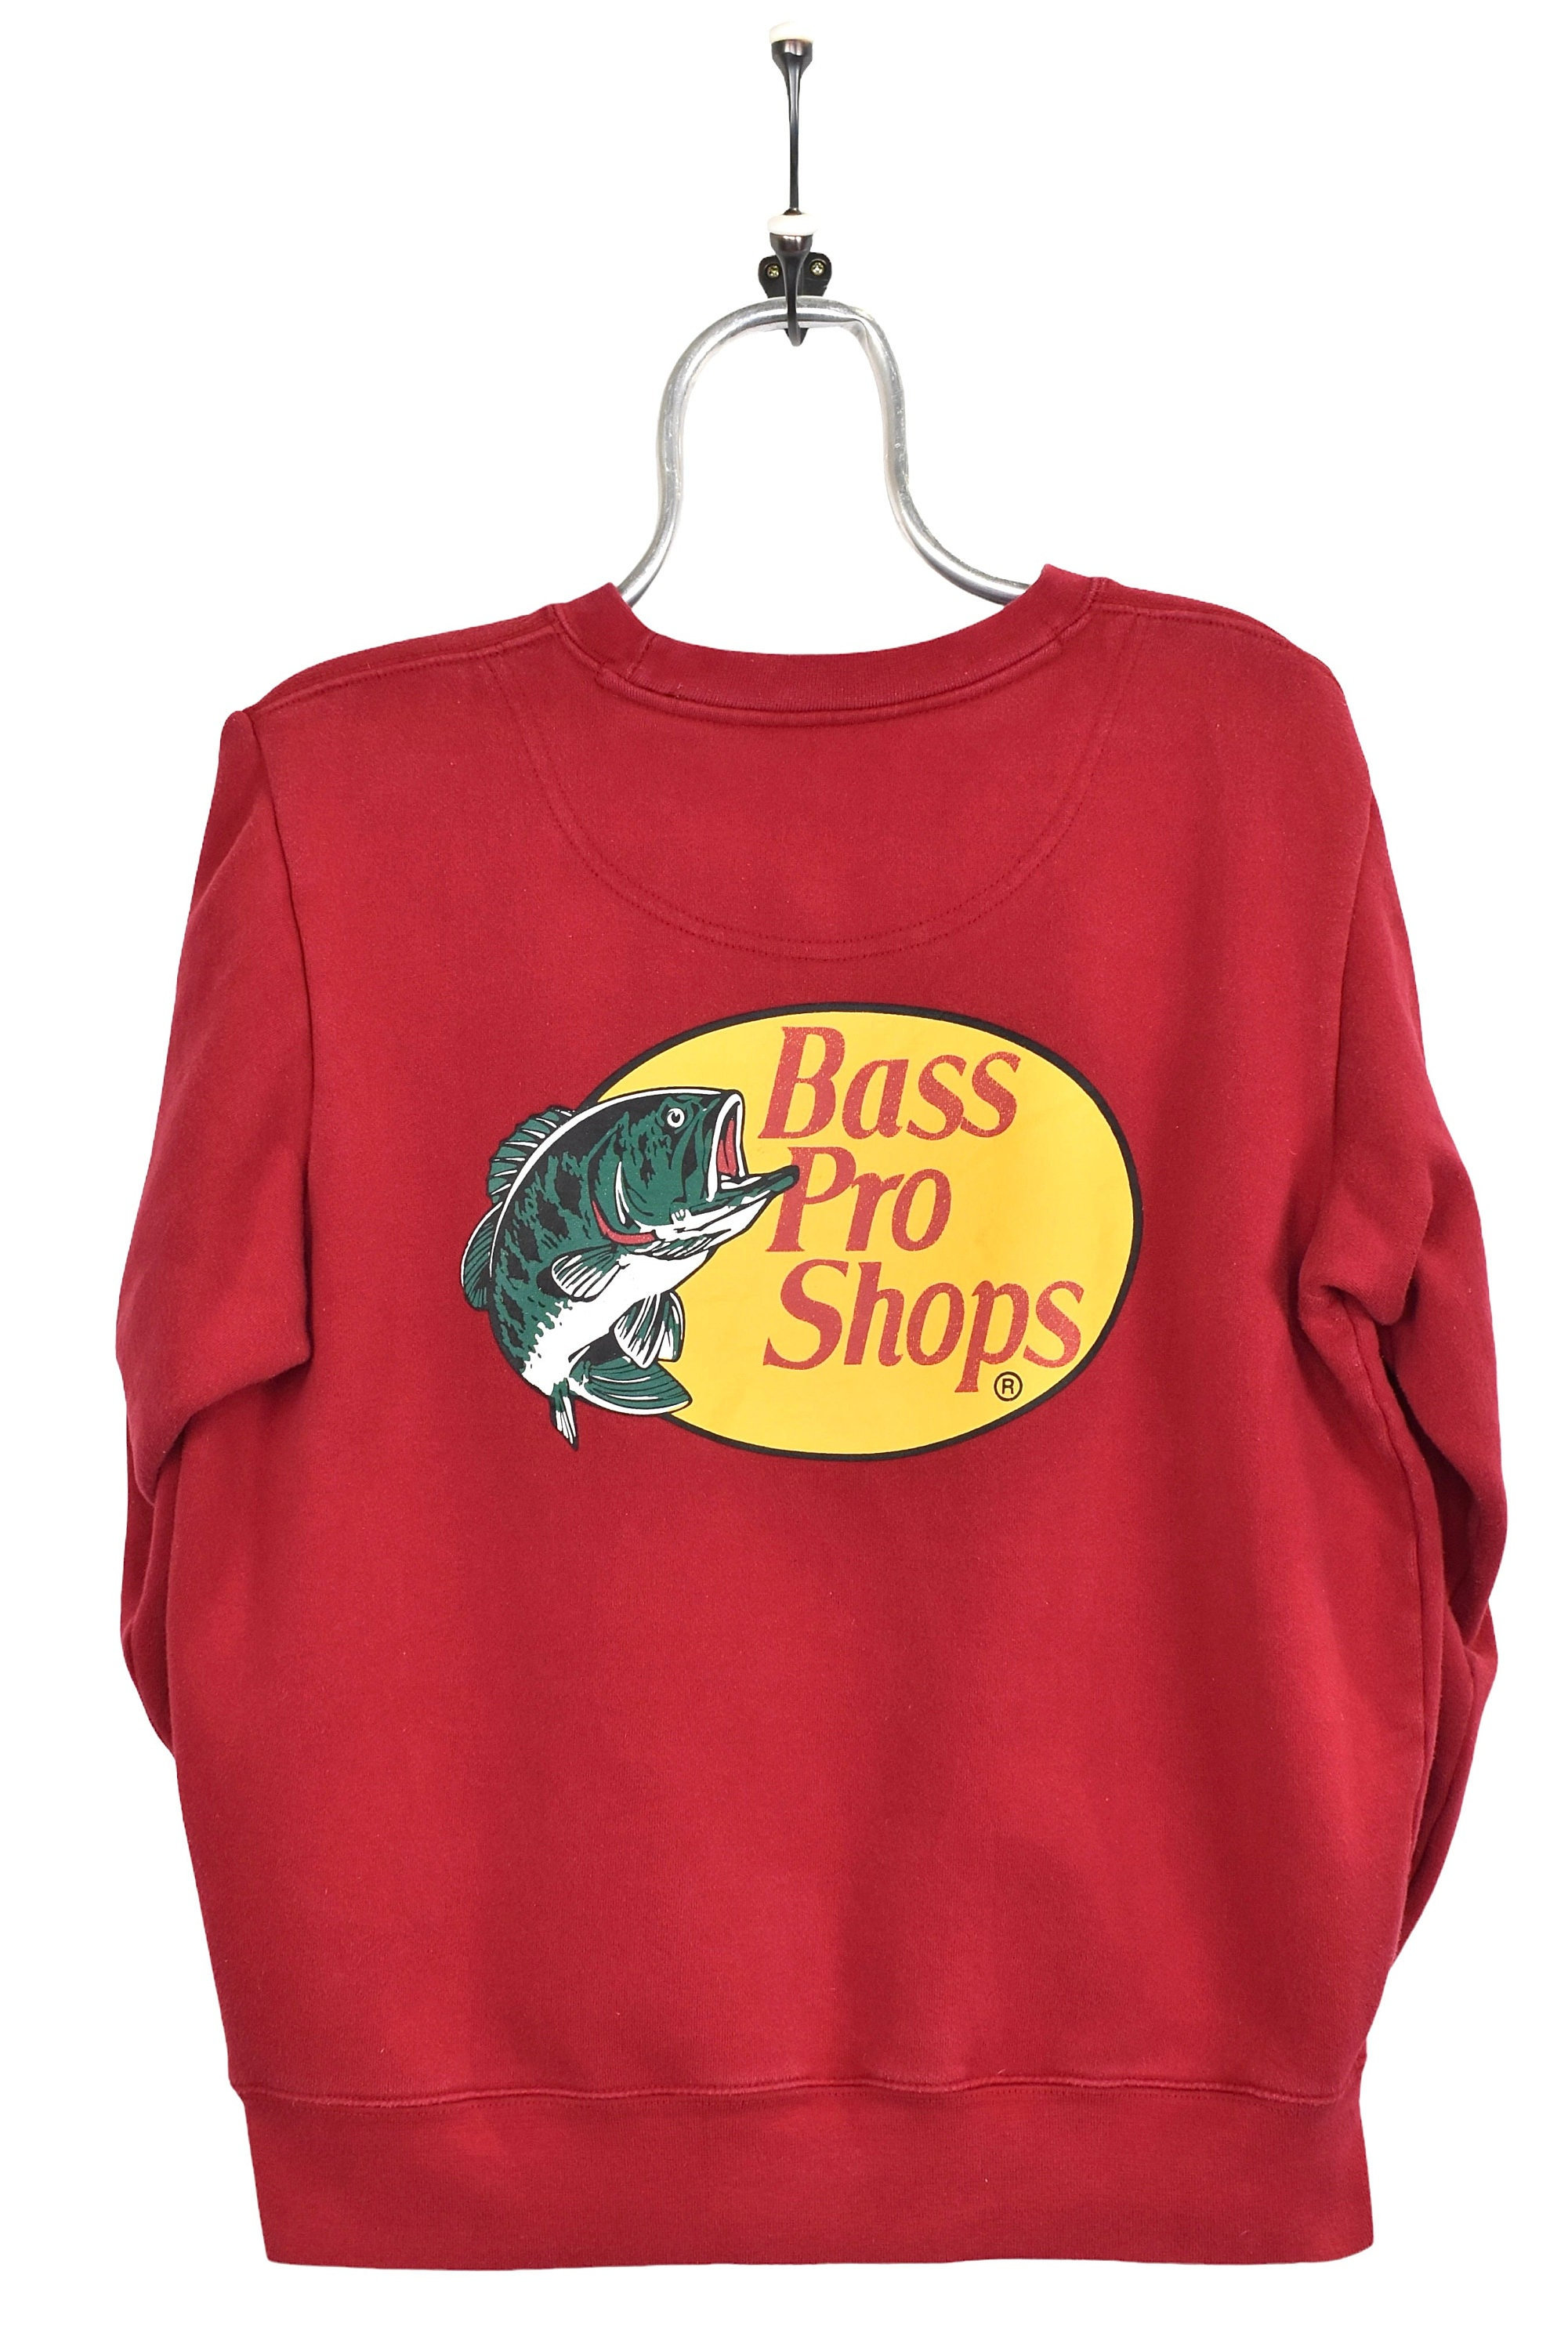 Vintage Bass Pro Shops Sweatshirt, 90s Streetwear Long Sleeve Red Graphic  Crewneck Sweater AU Small S 